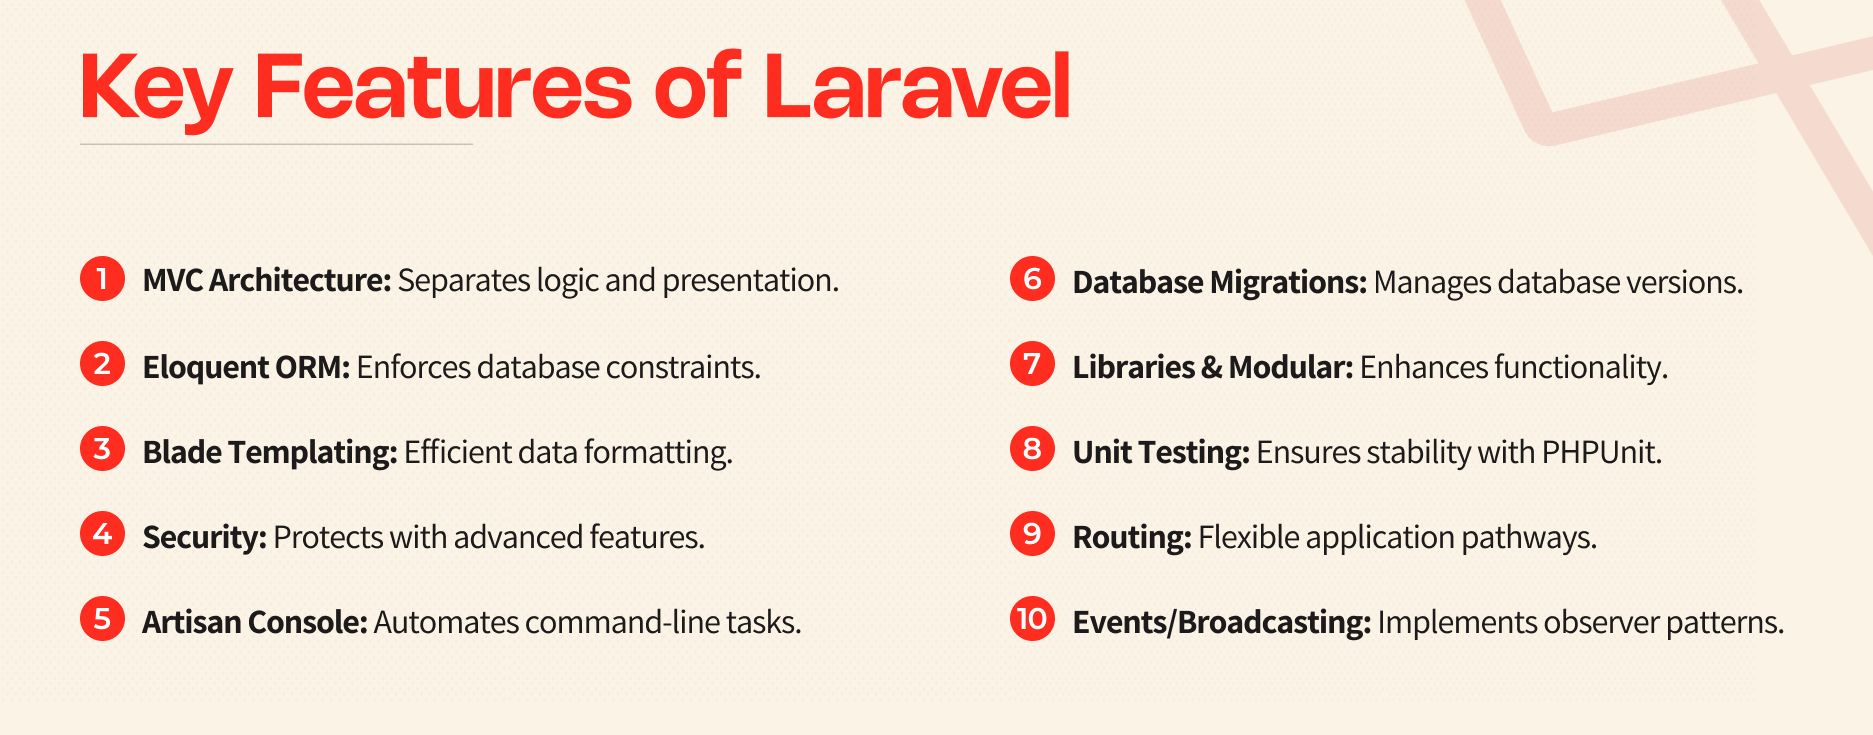 Key features of Laravel